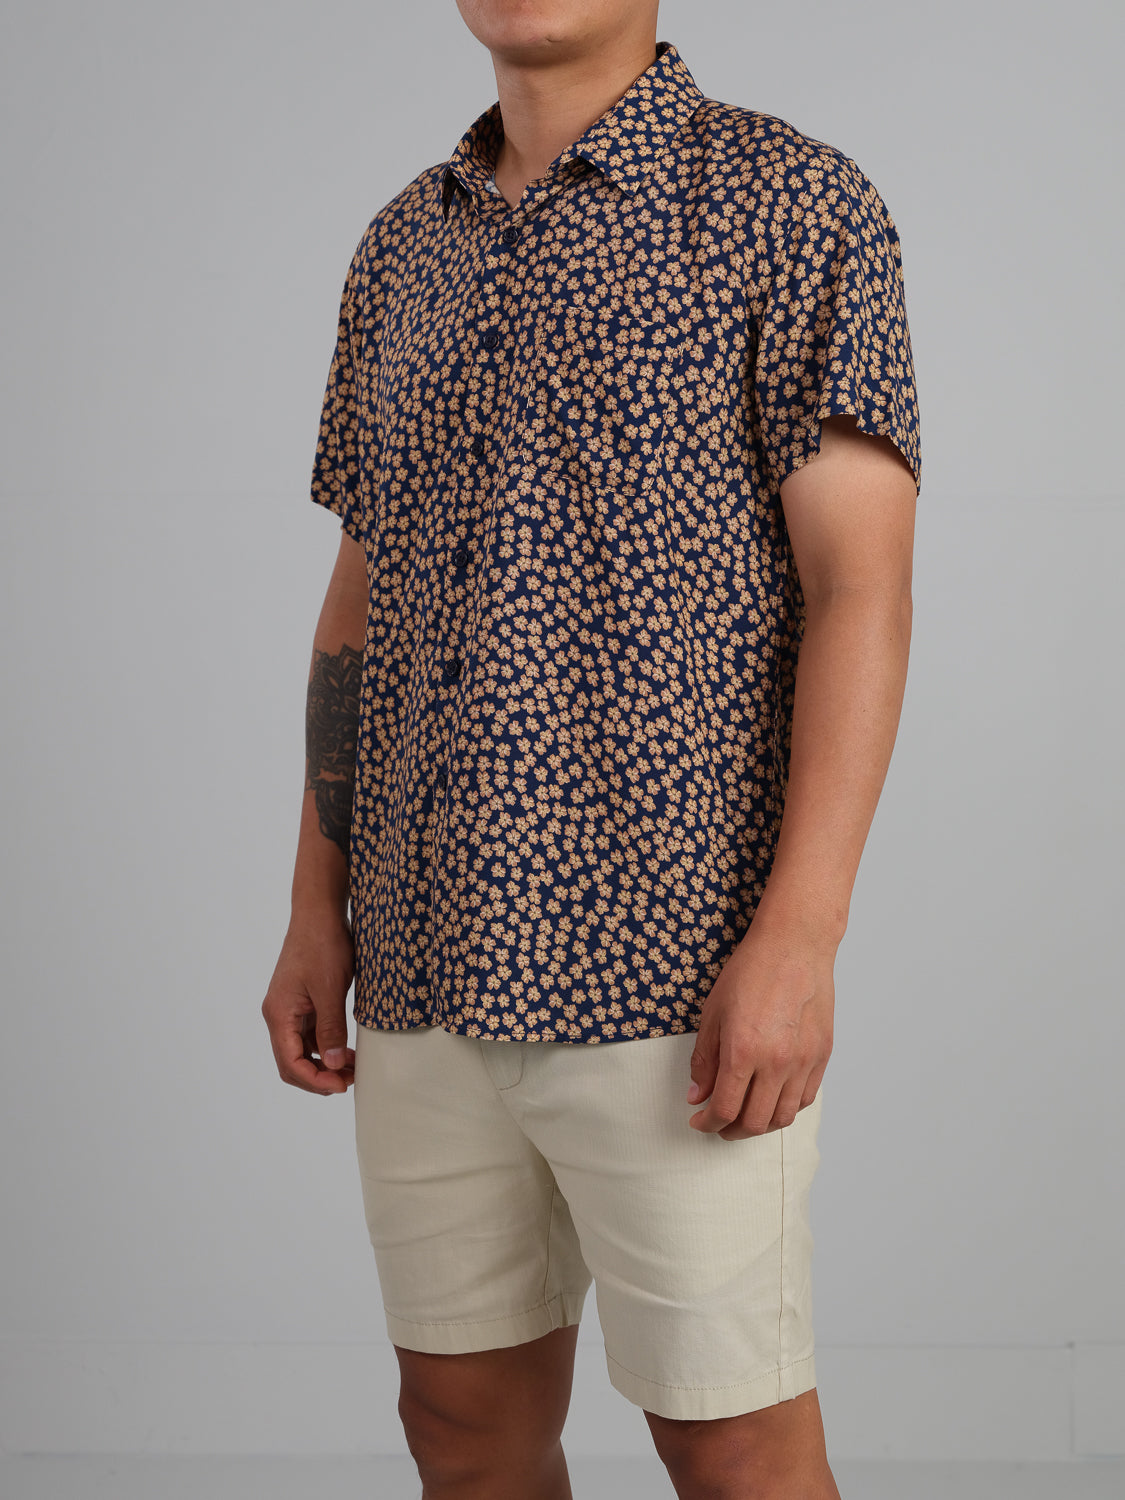 Ohau Short Sleeve Printed Rayon Shirt